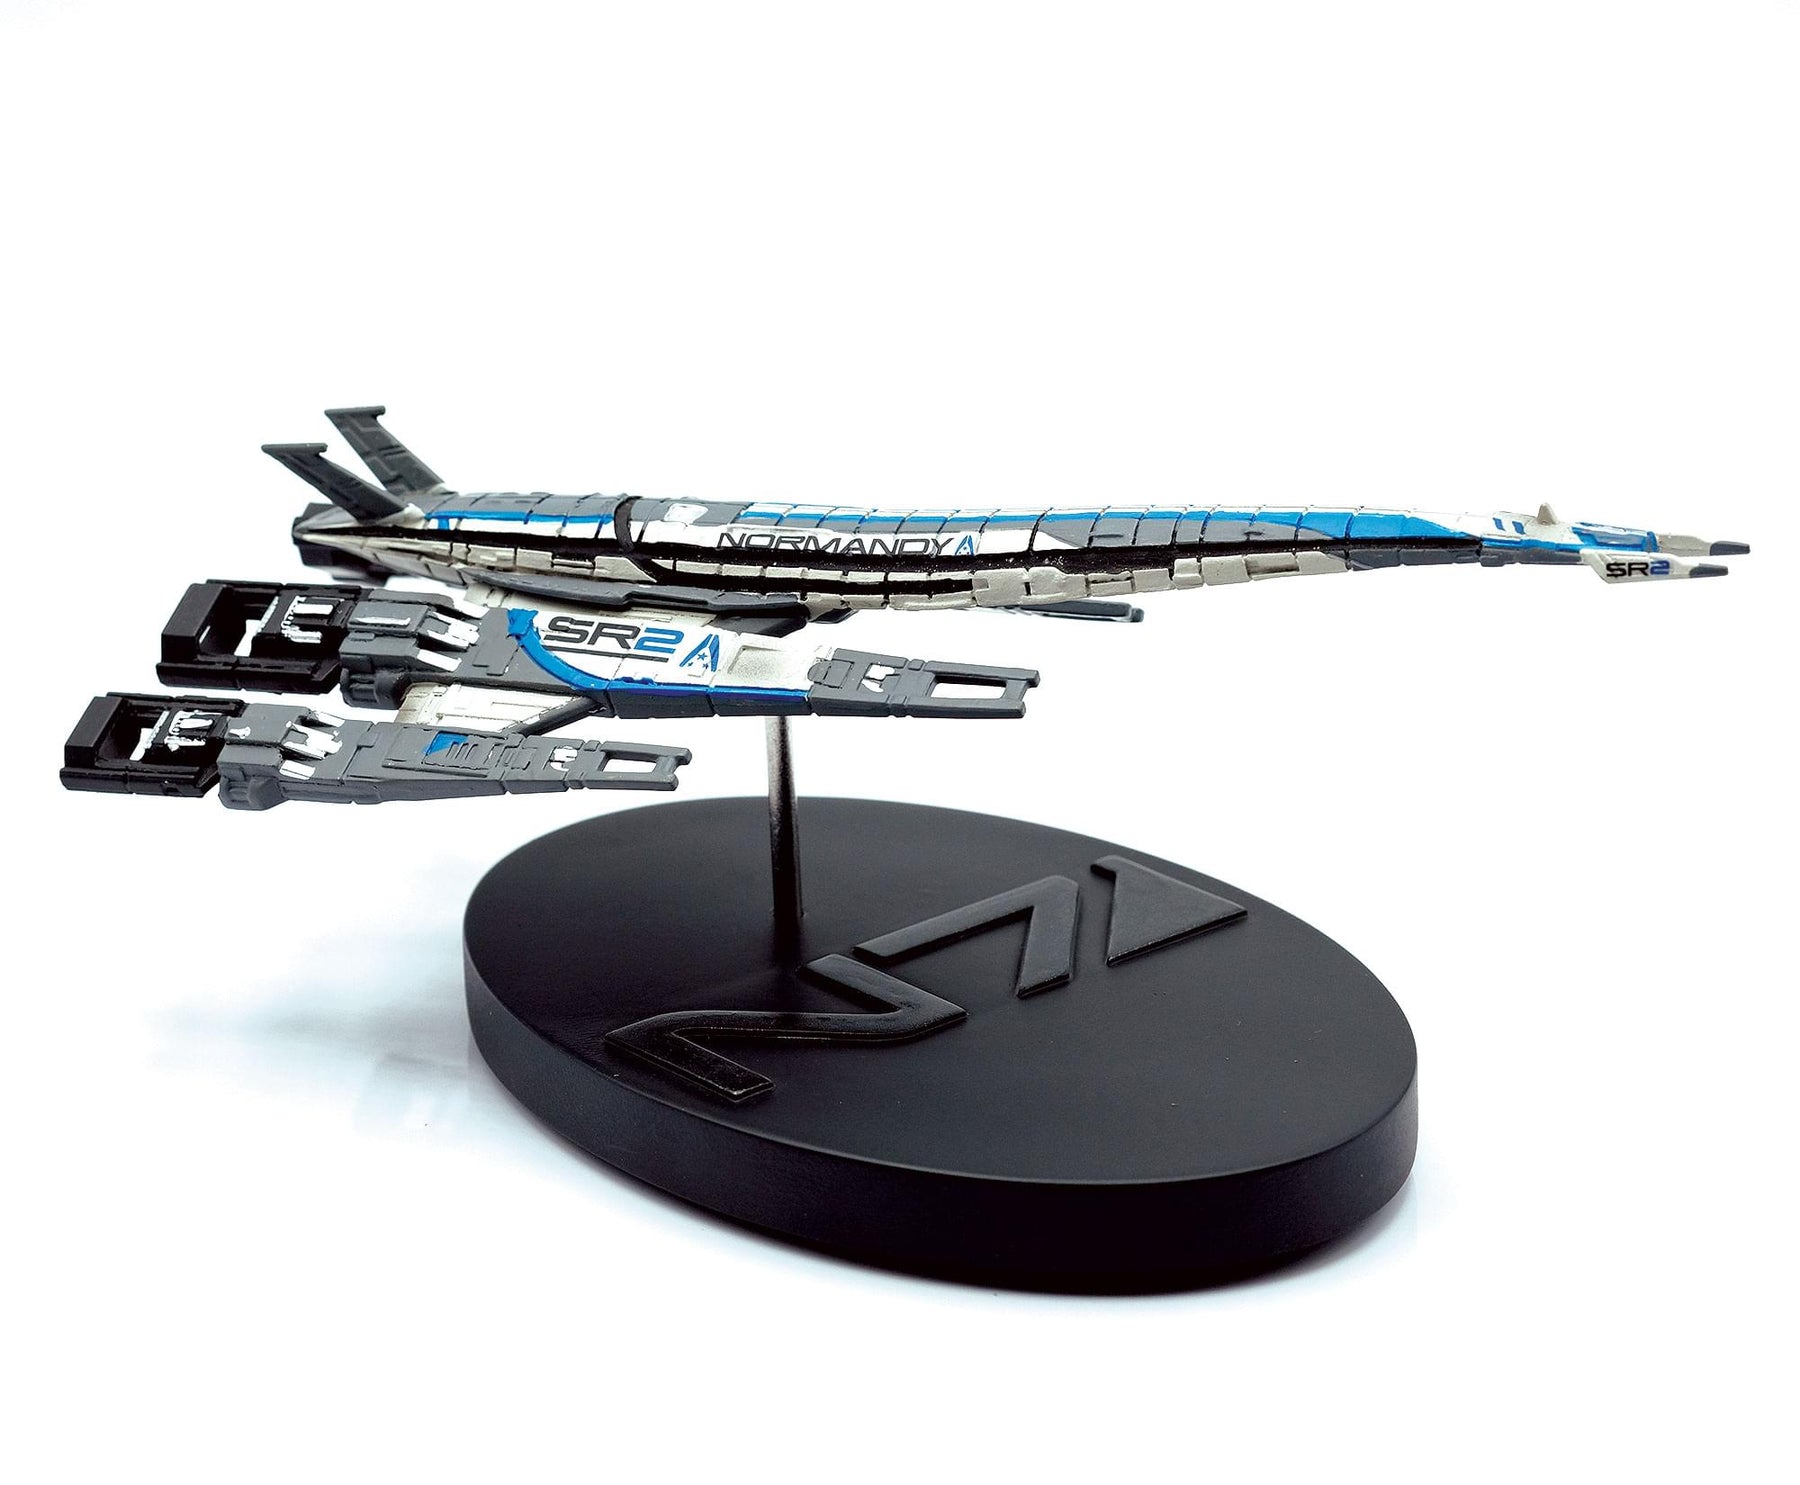 Mass Effect Normandy SR-2 6.25 Inch Collectible Replica Ship